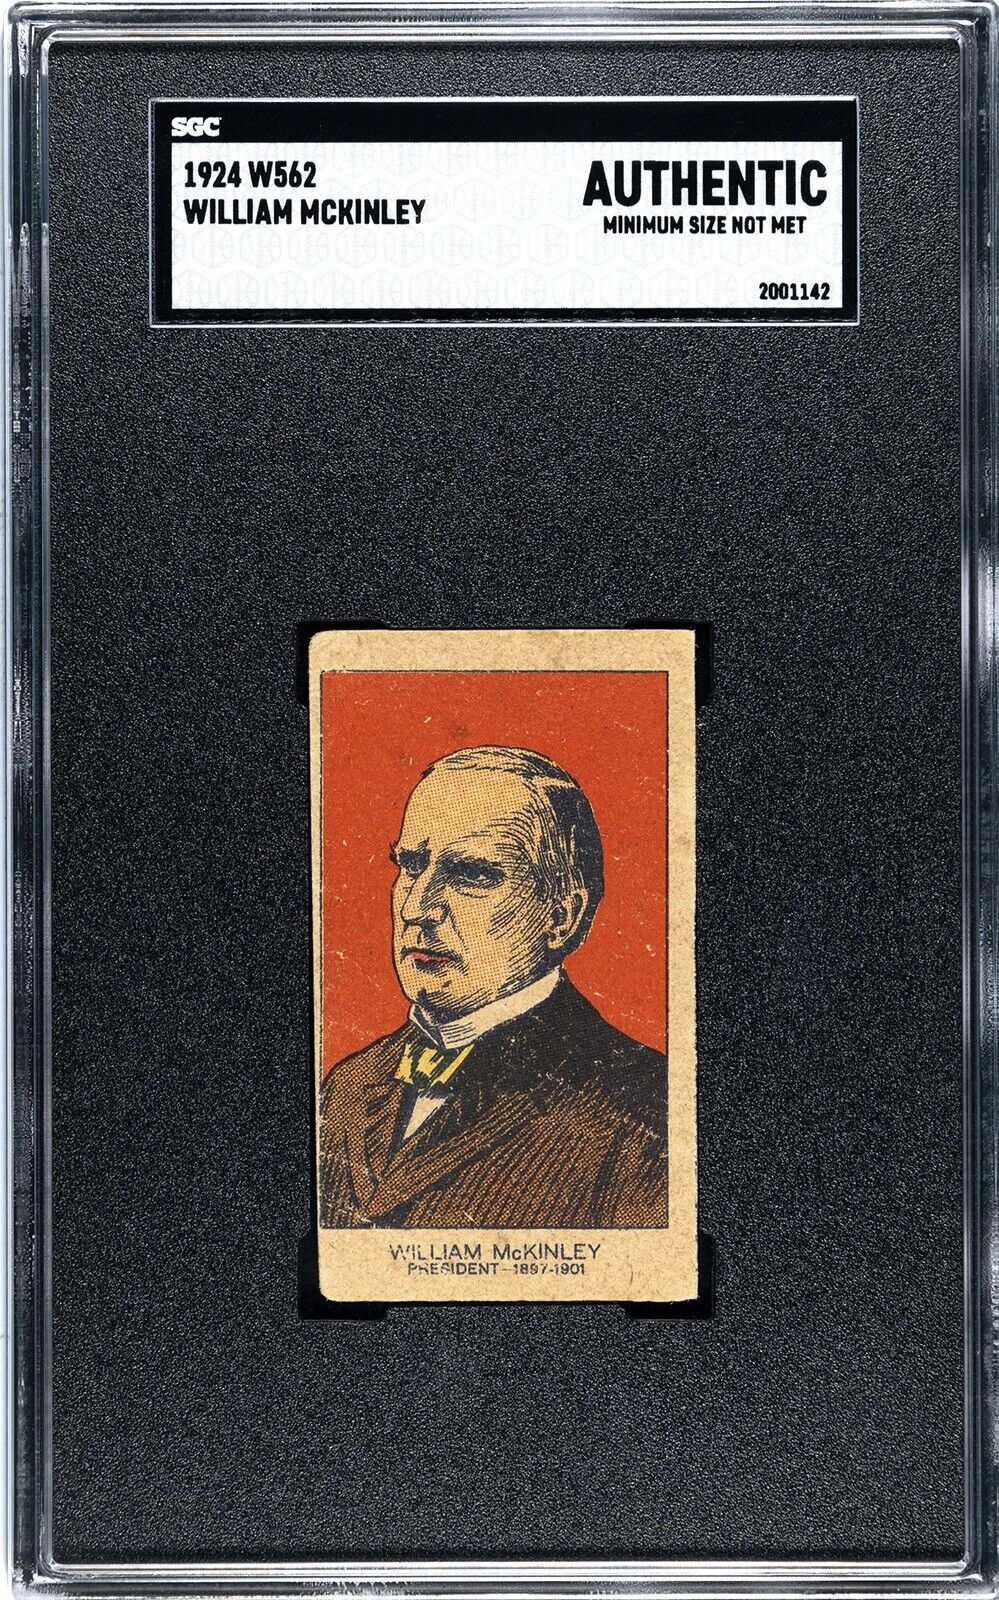 RARE 1924 W562 President William McKinley Strip Card - SGC Authentic - POP 2